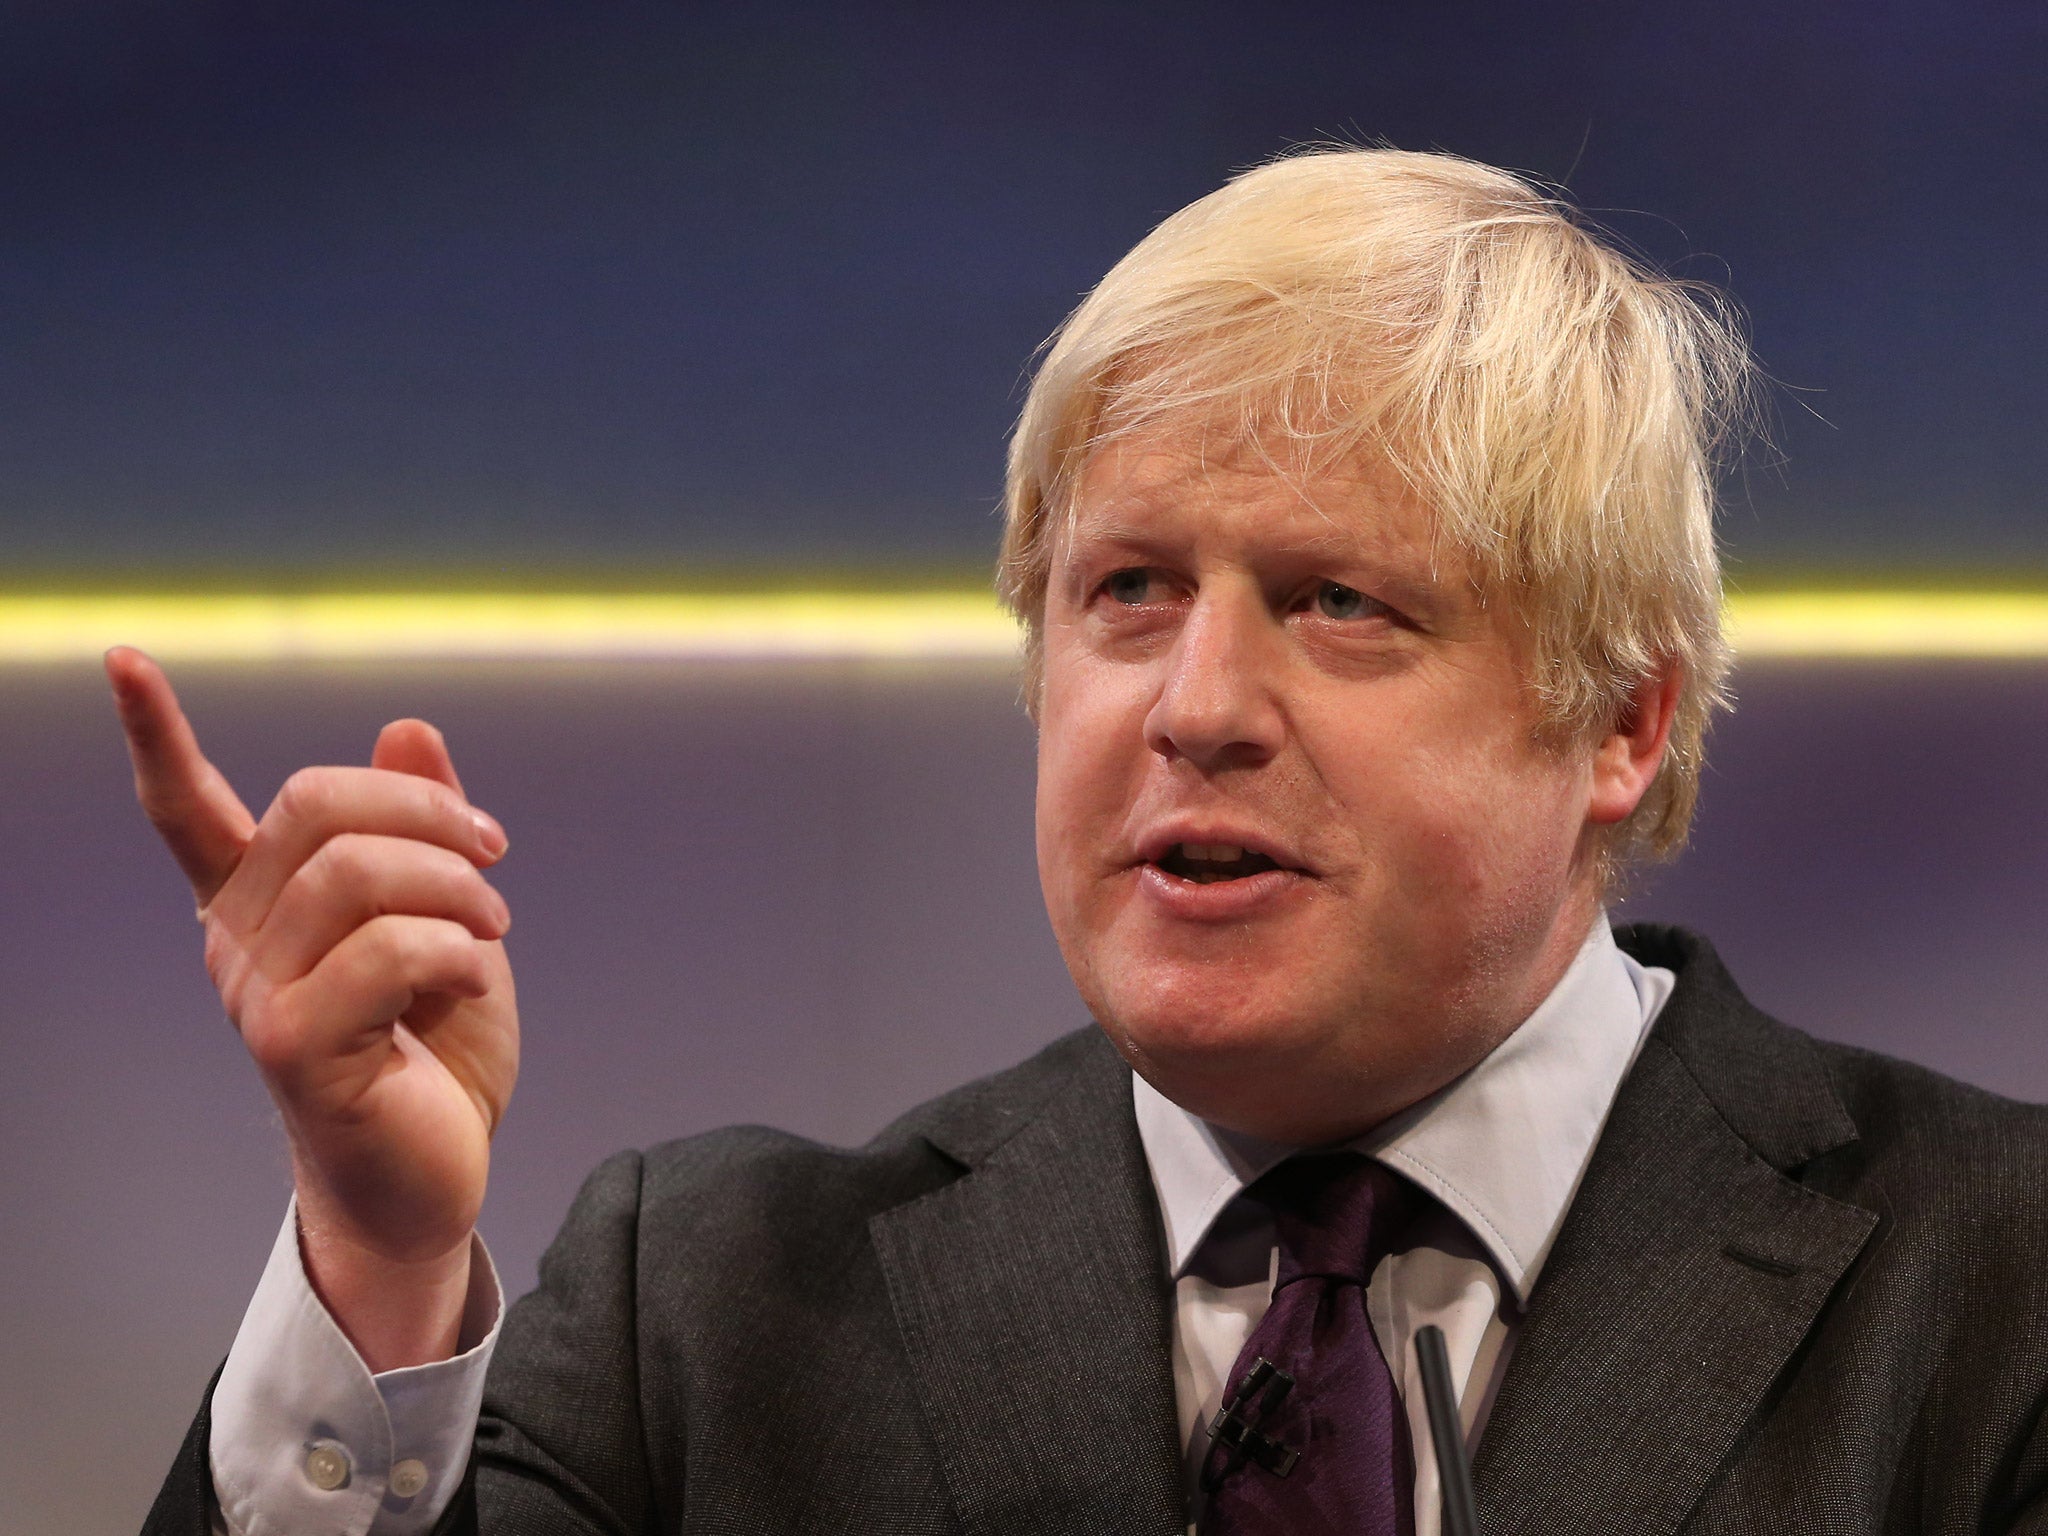 London Mayor Boris Johnson ambushed Nick Clegg's radio show